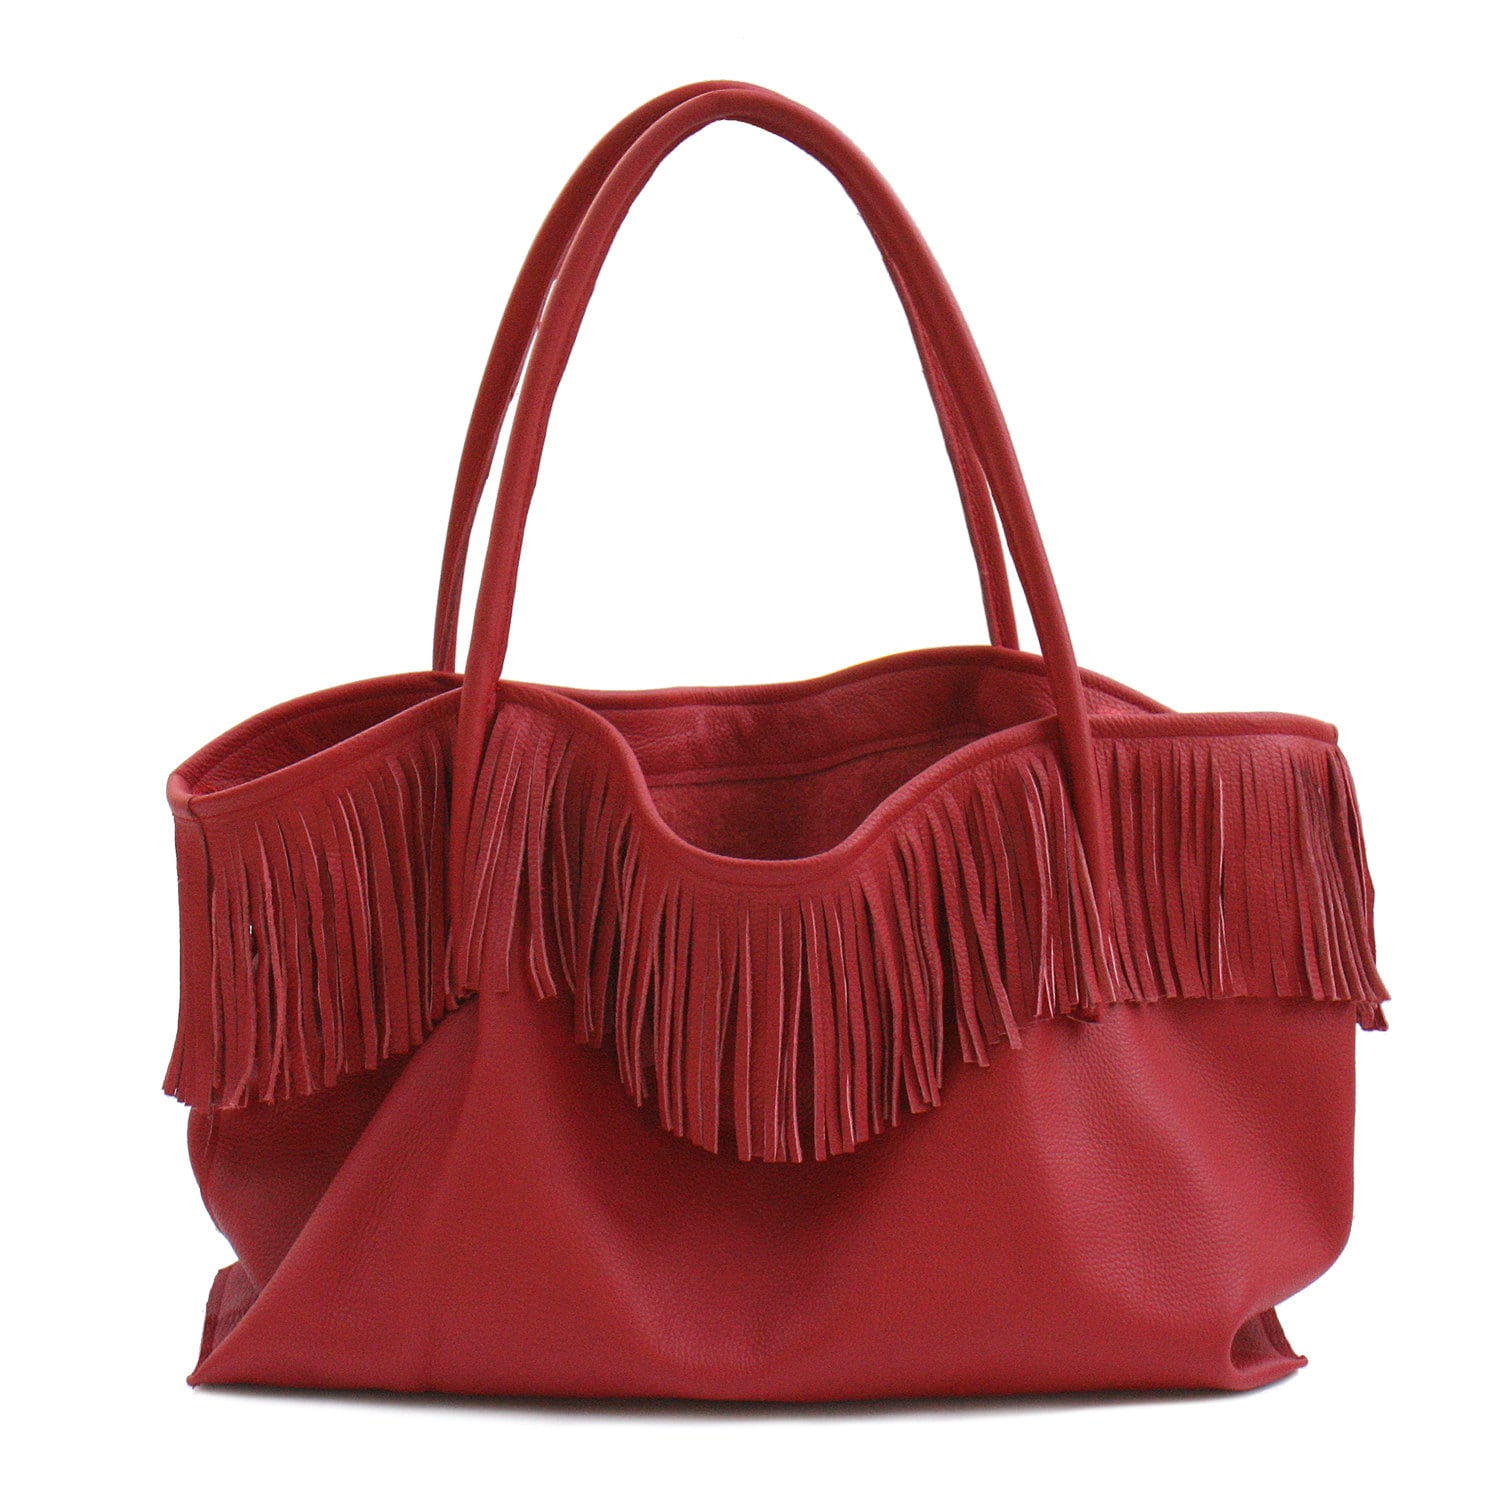 Large leather case. Bag tote Bag XXL Shopper handbag Handmade | Etsy